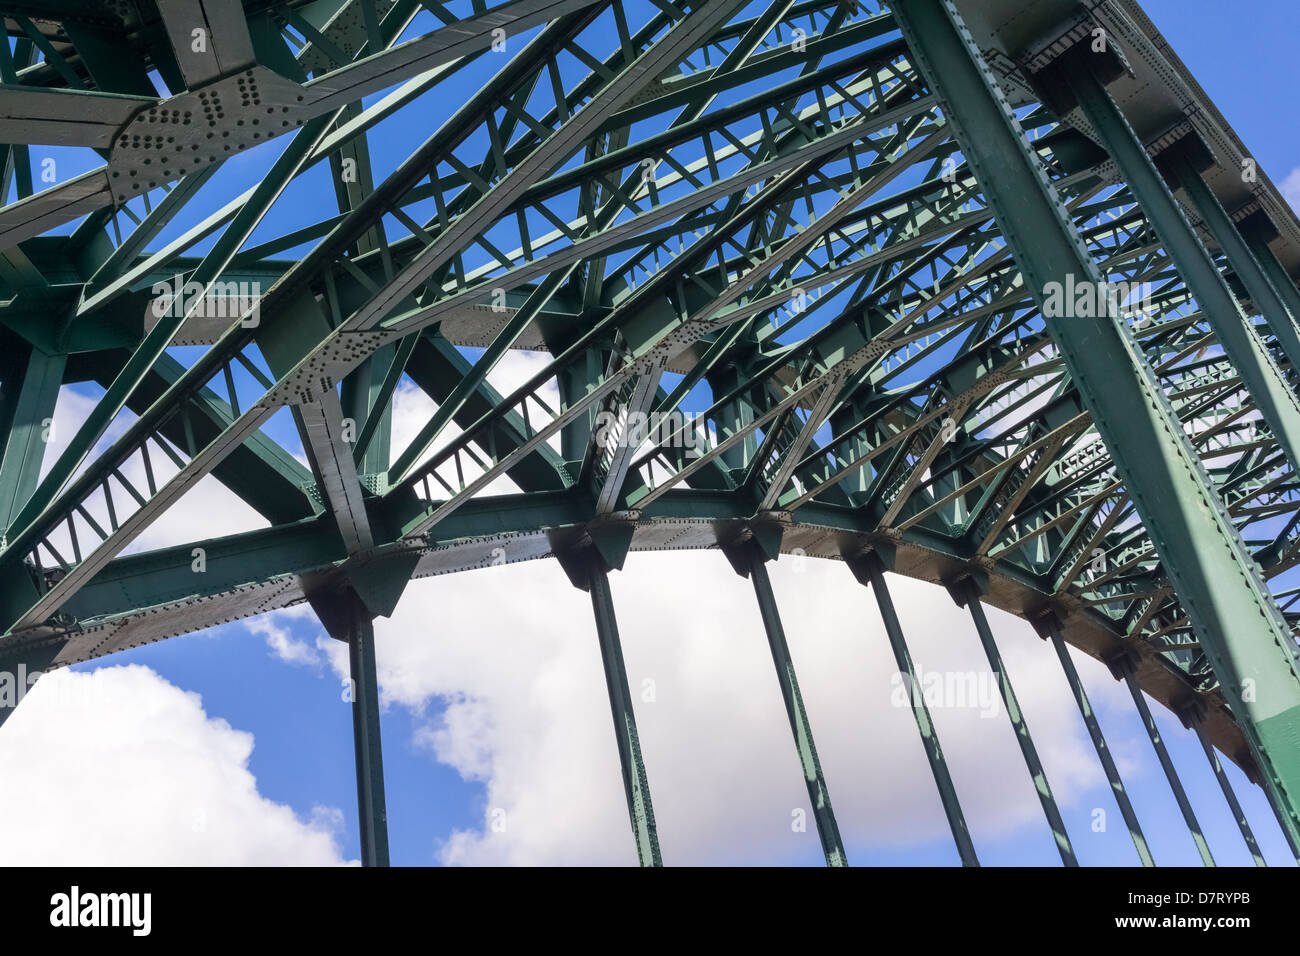 Cerrar imagen del Tyne Bridge en Newcastle. Foto de stock